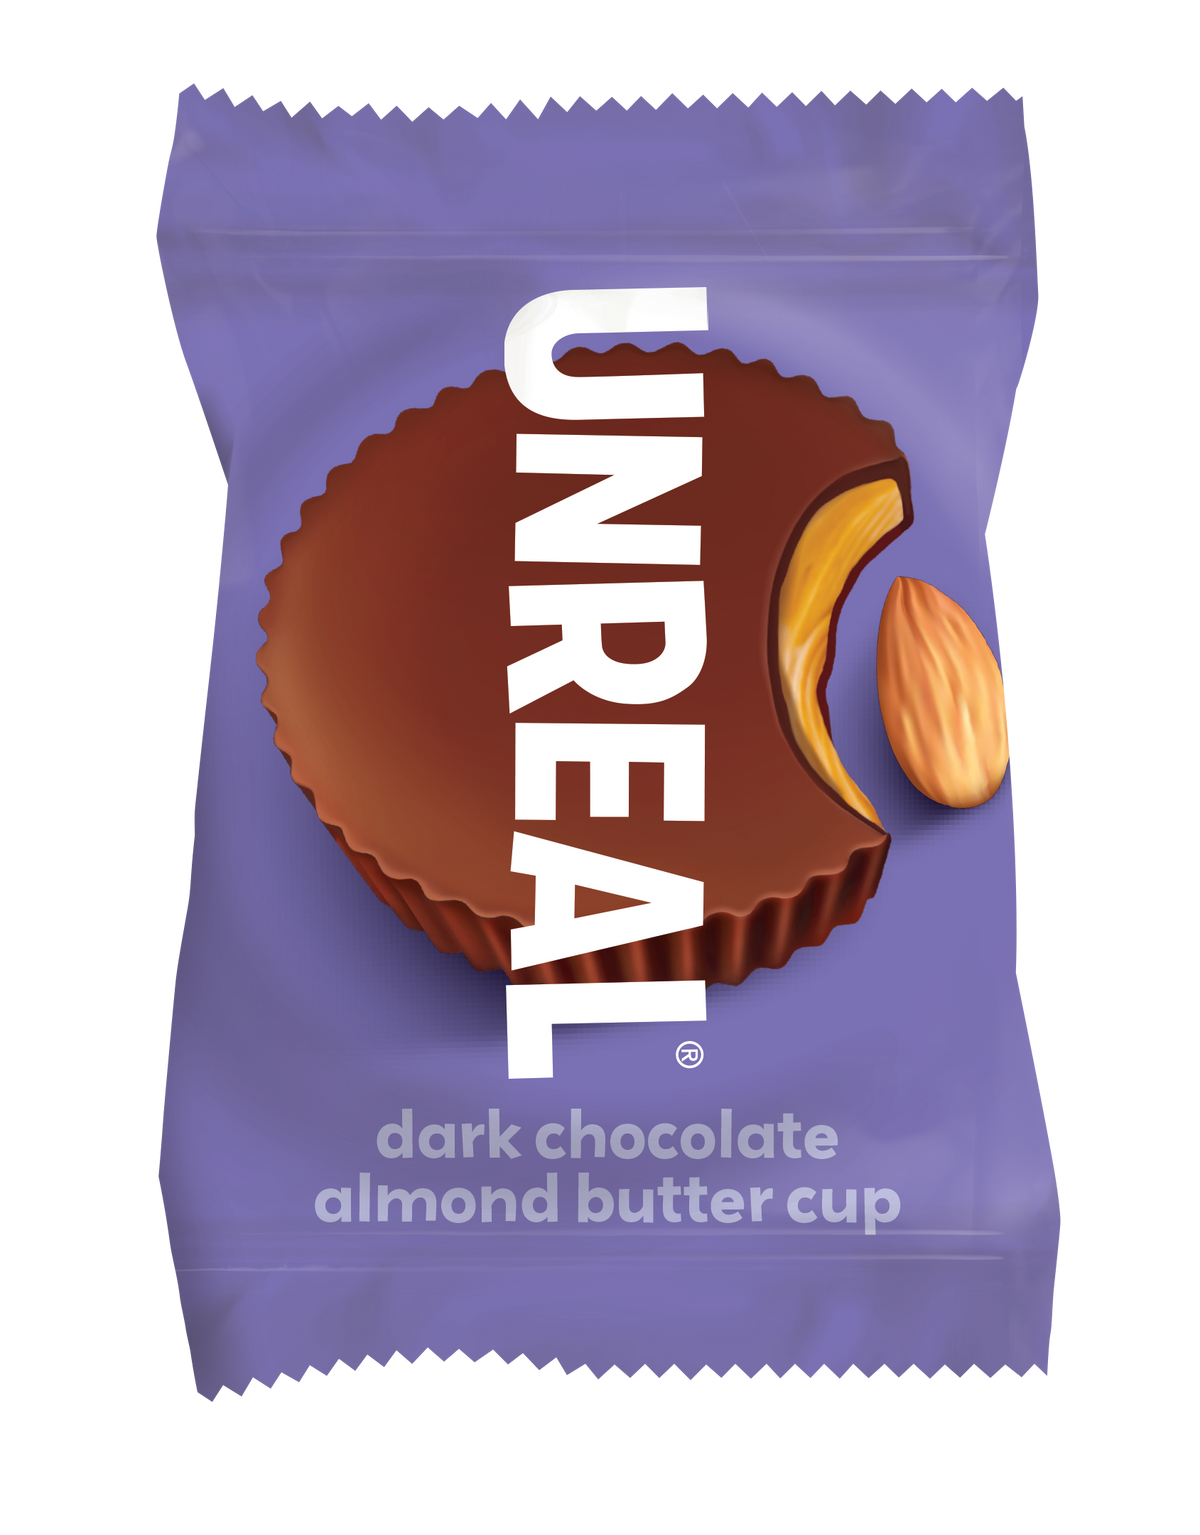 UnReal Mini Dark Chocolate Almond Butter Cups 0.5oz (40ct)